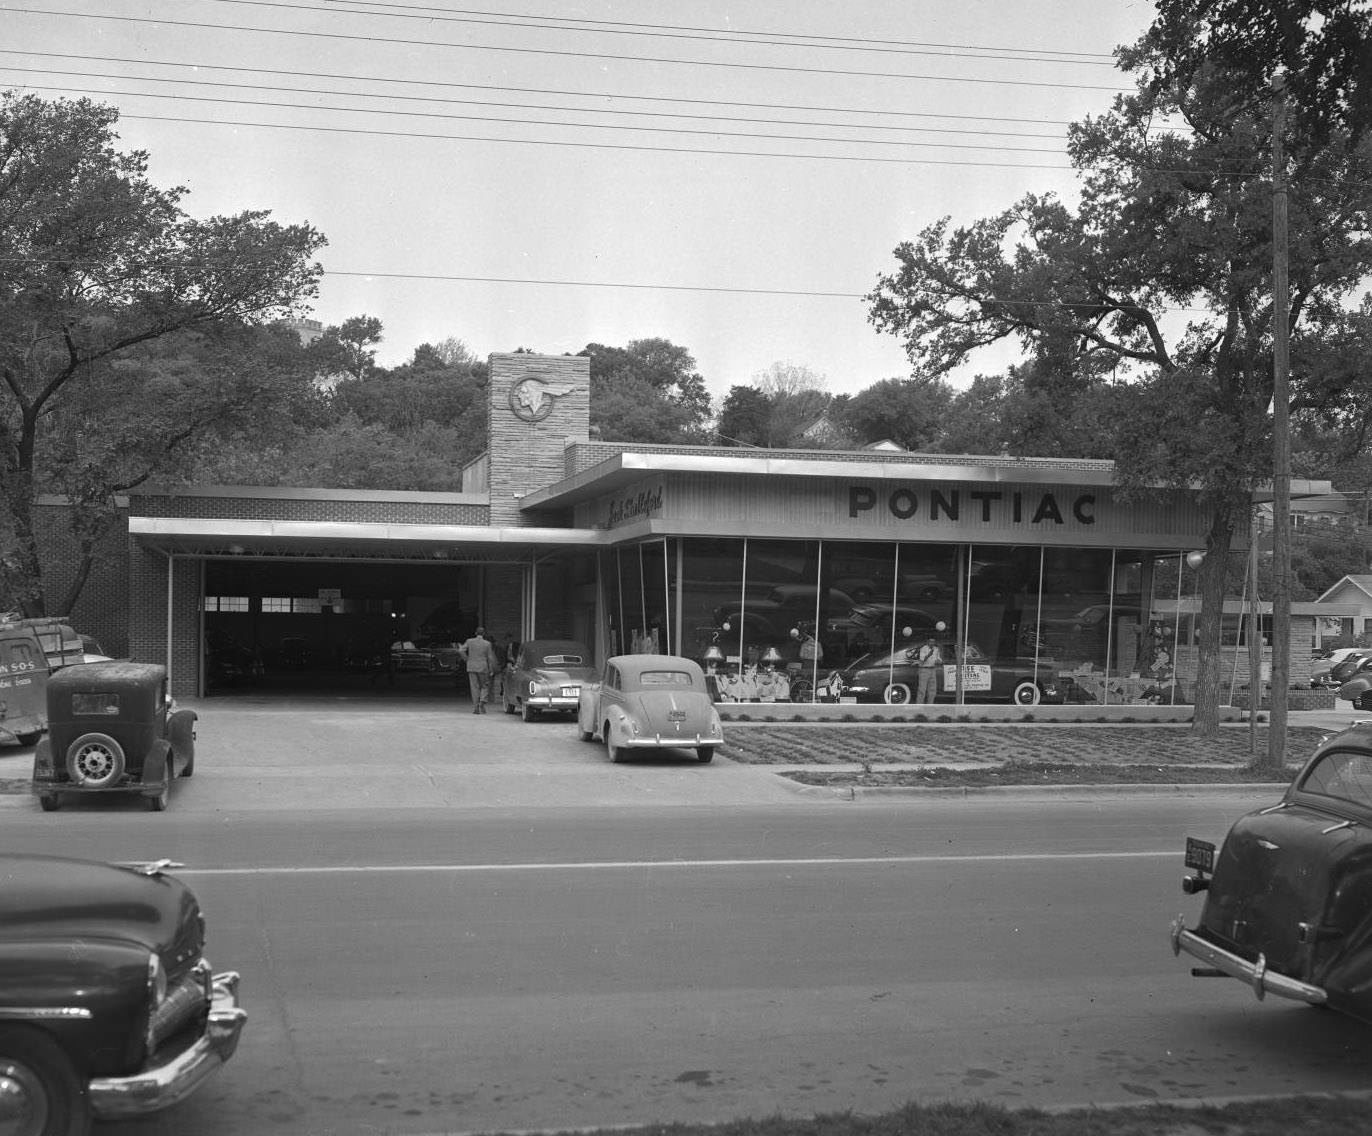 Jack Stableford Pontiac Dealership at 1020 Lamar Blvd, 1950.